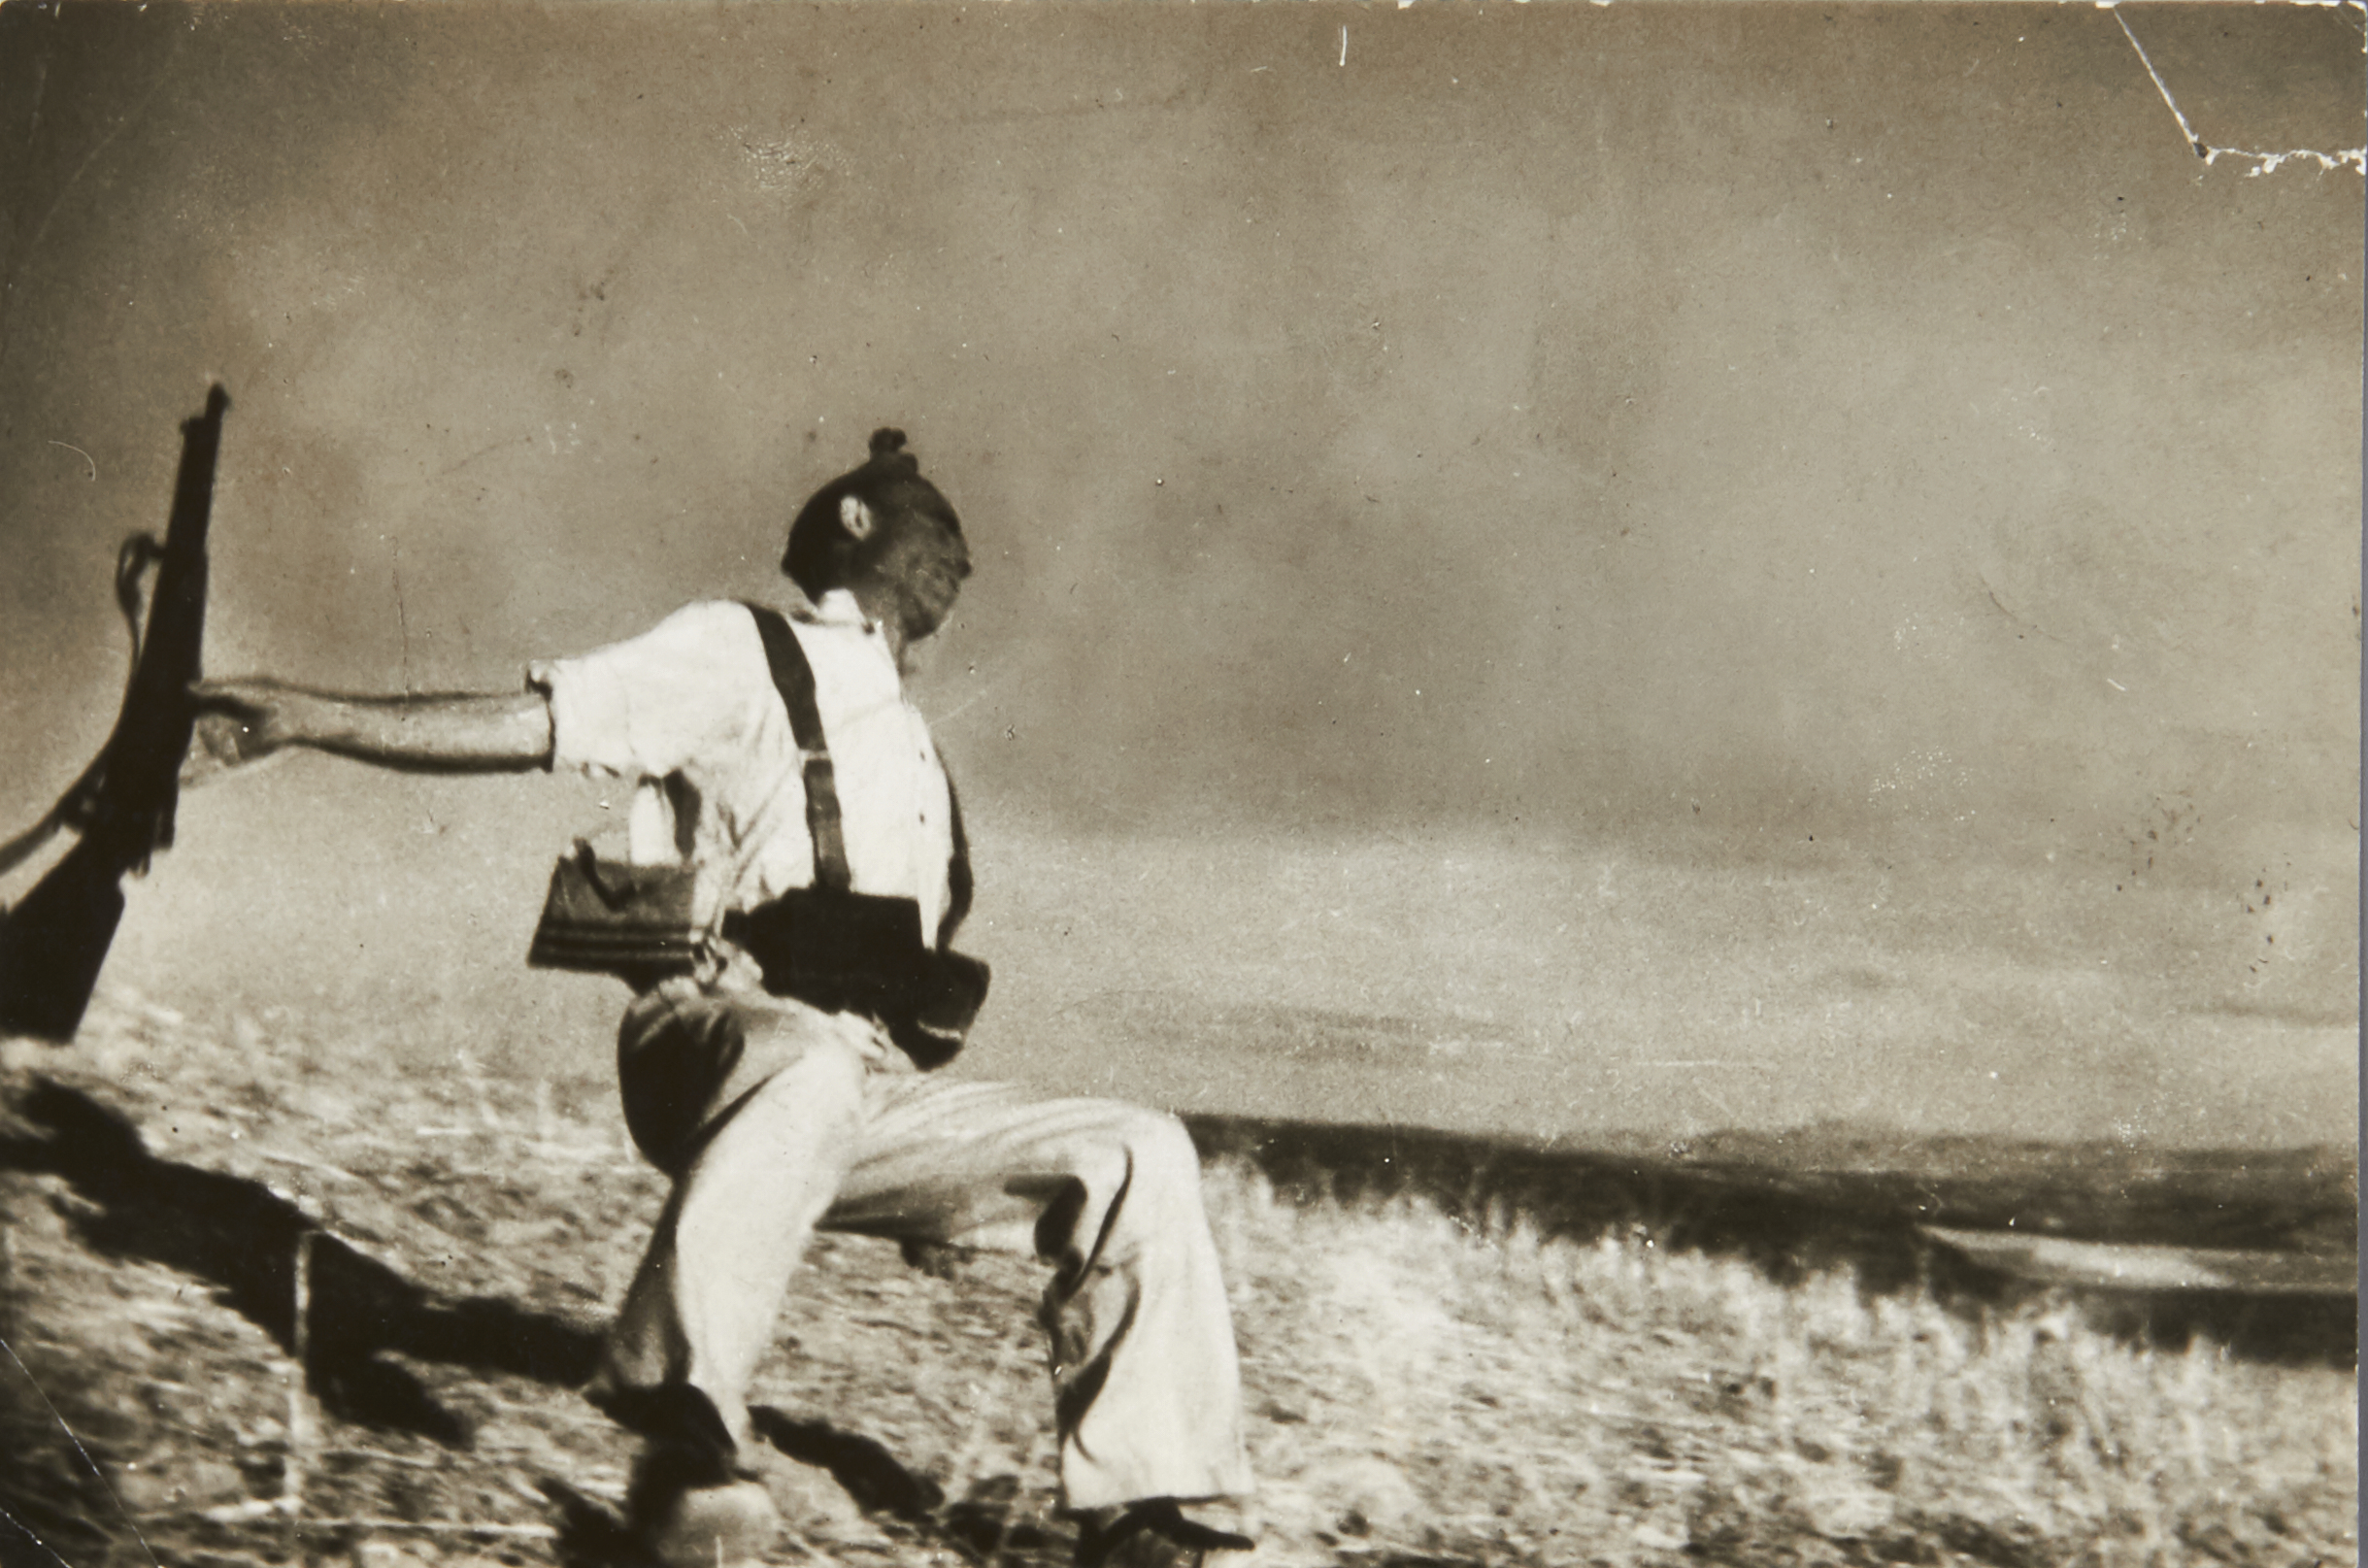 (Loyalist Militiaman at the Moment of Death),Robert Capa, Córdoba front, September 5th, 1936 